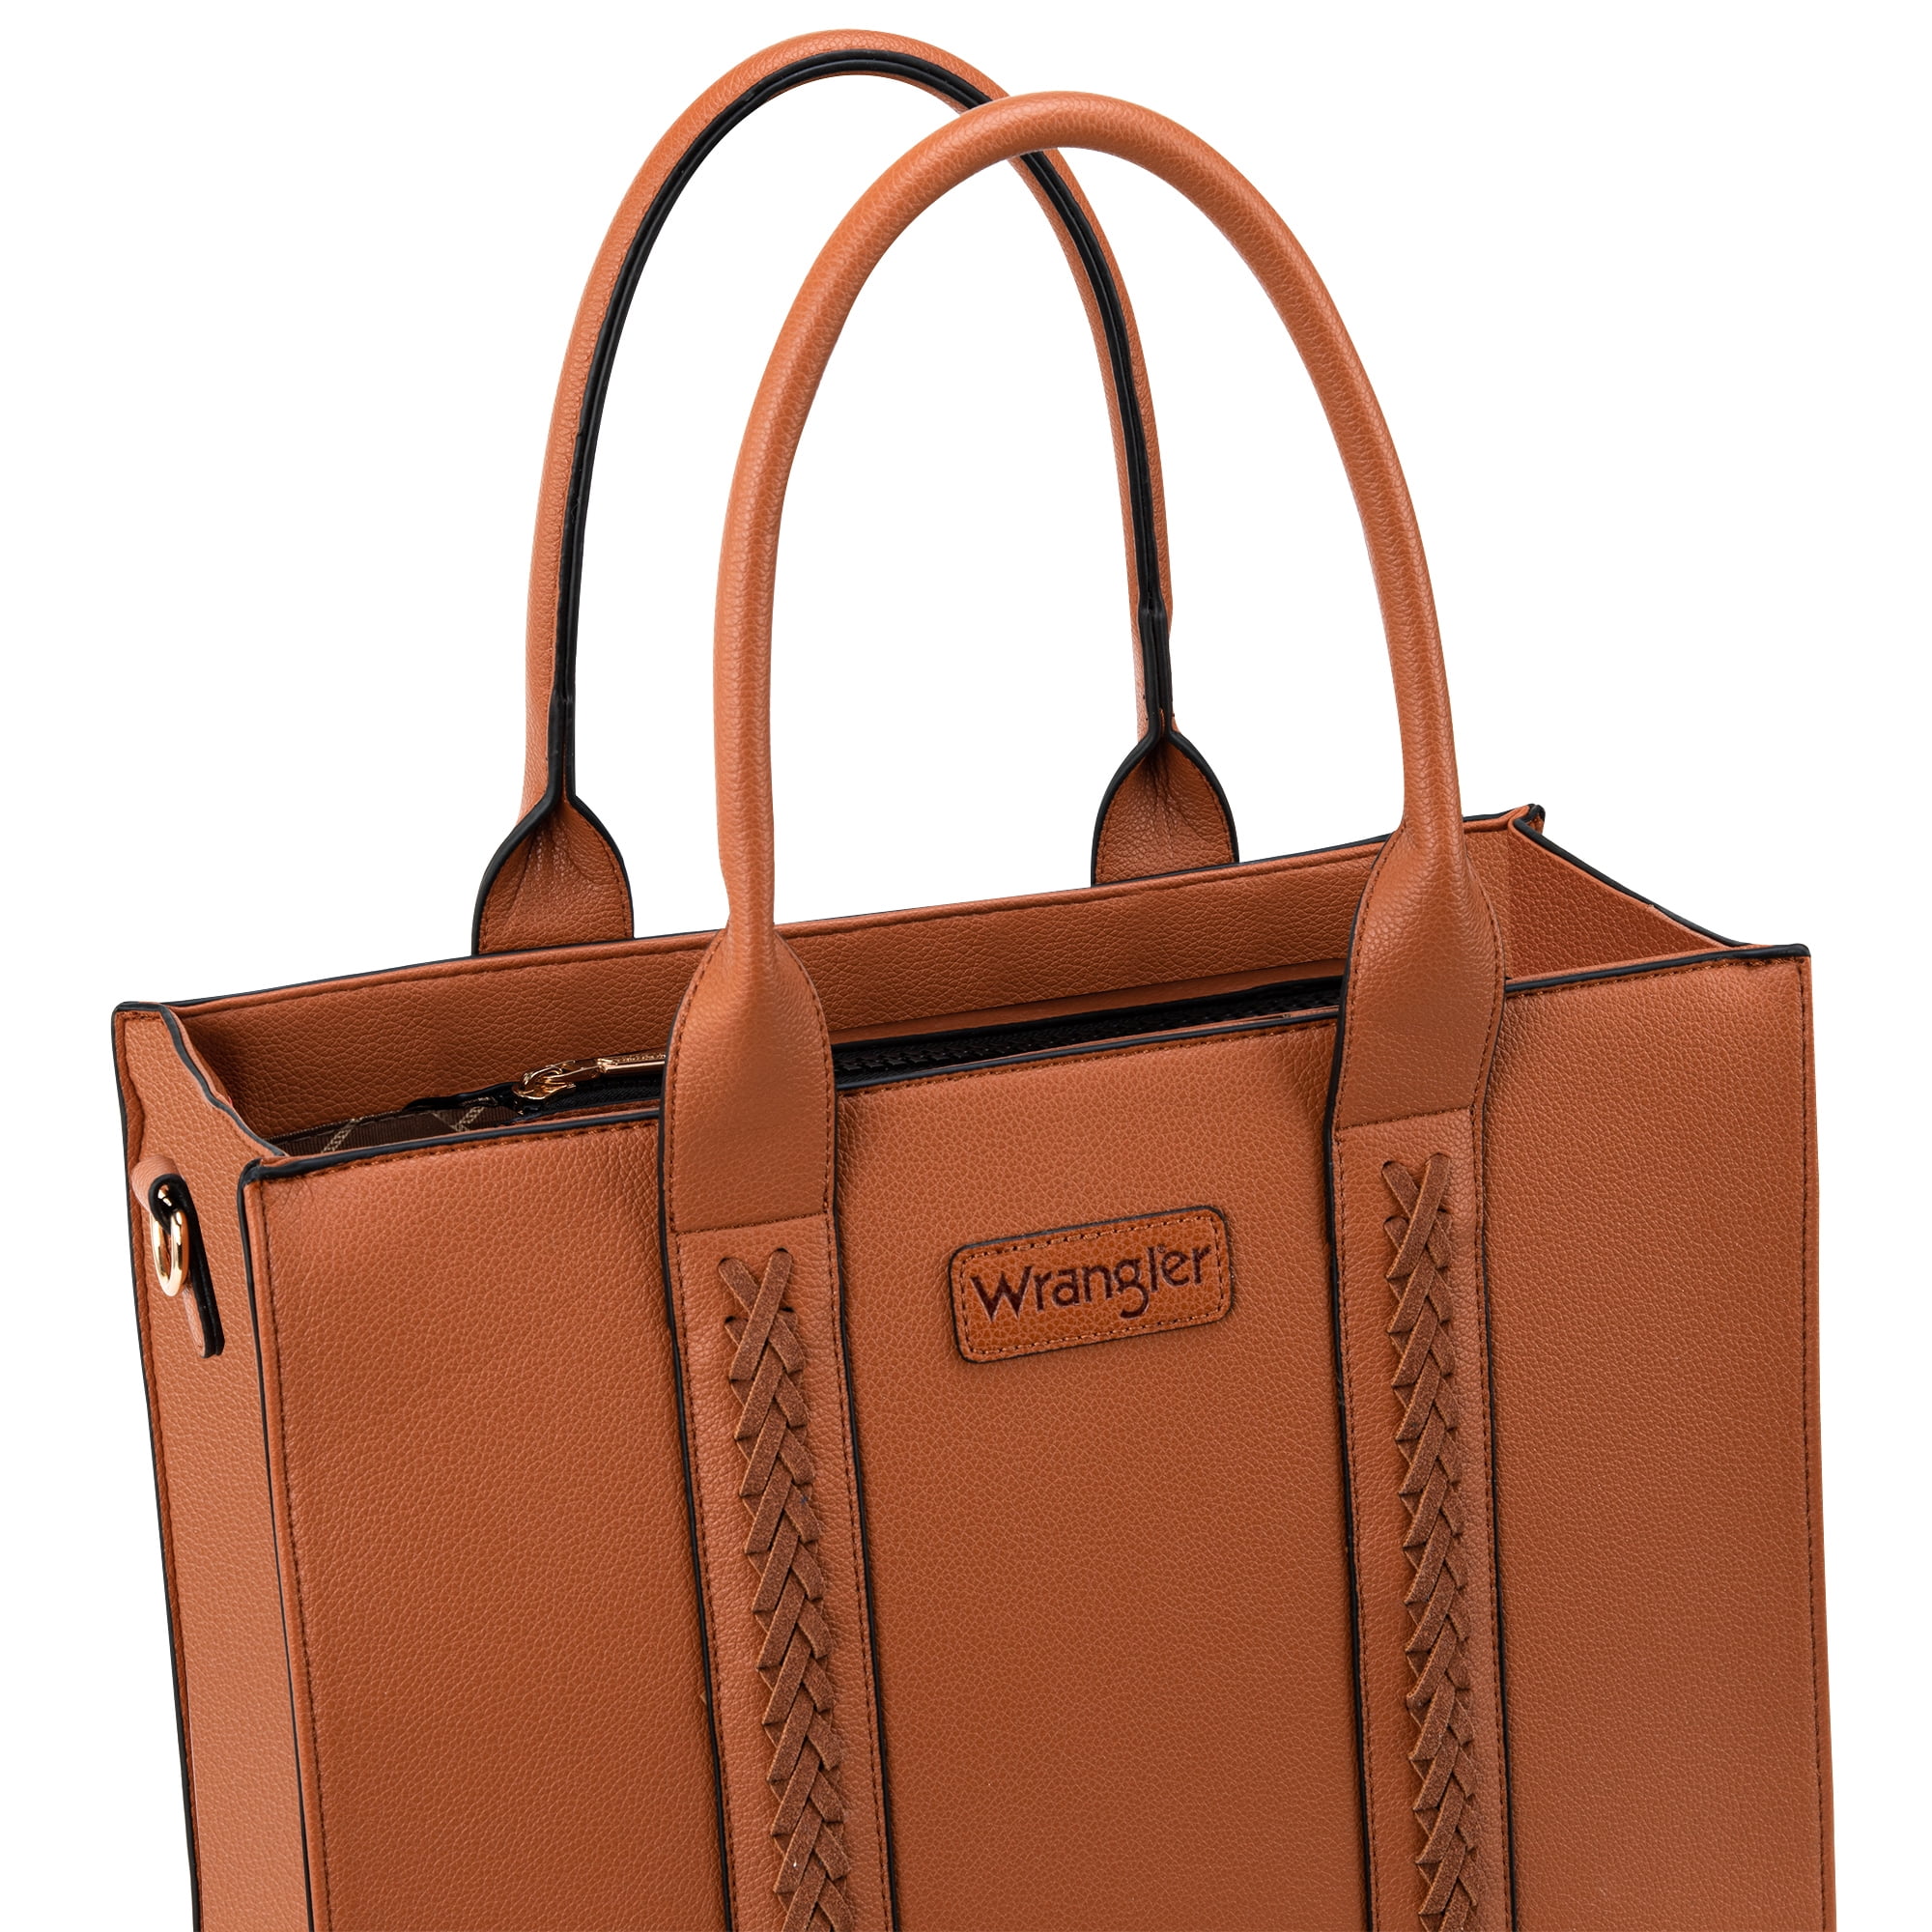 Buy Vintage Wrangler Bag Online in India - Etsy